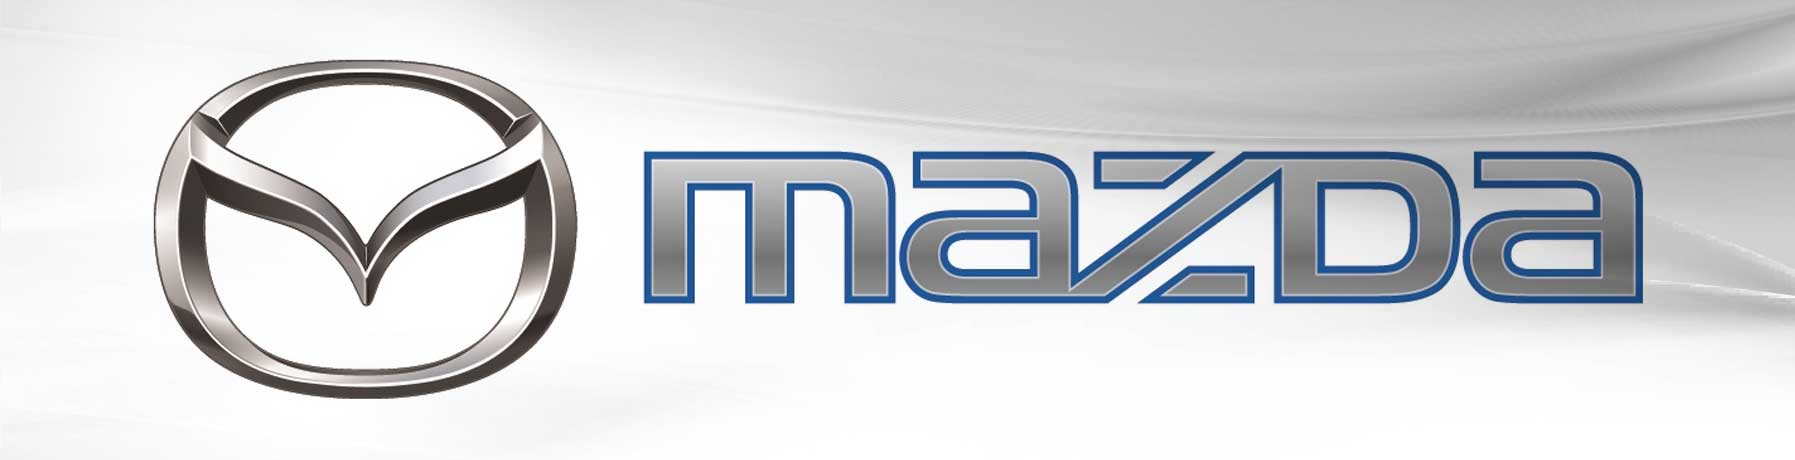 We service Mazda vehicles